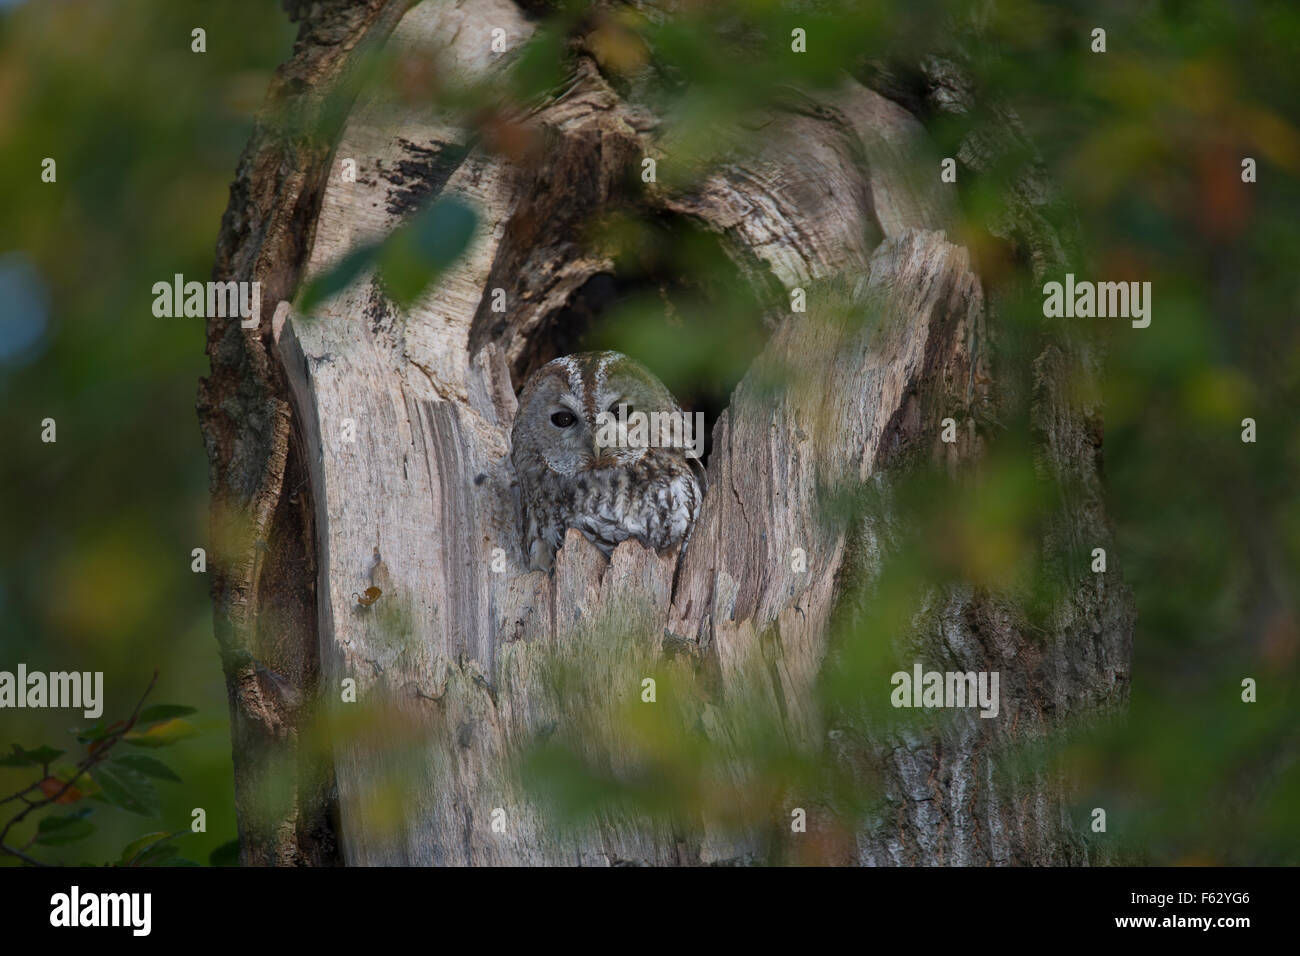 Allocco, Waldkauz, ruht am Tage in einer Baumhöhle, Strix aluco, Wald-Kauz, Kauz, Käuzchen Foto Stock